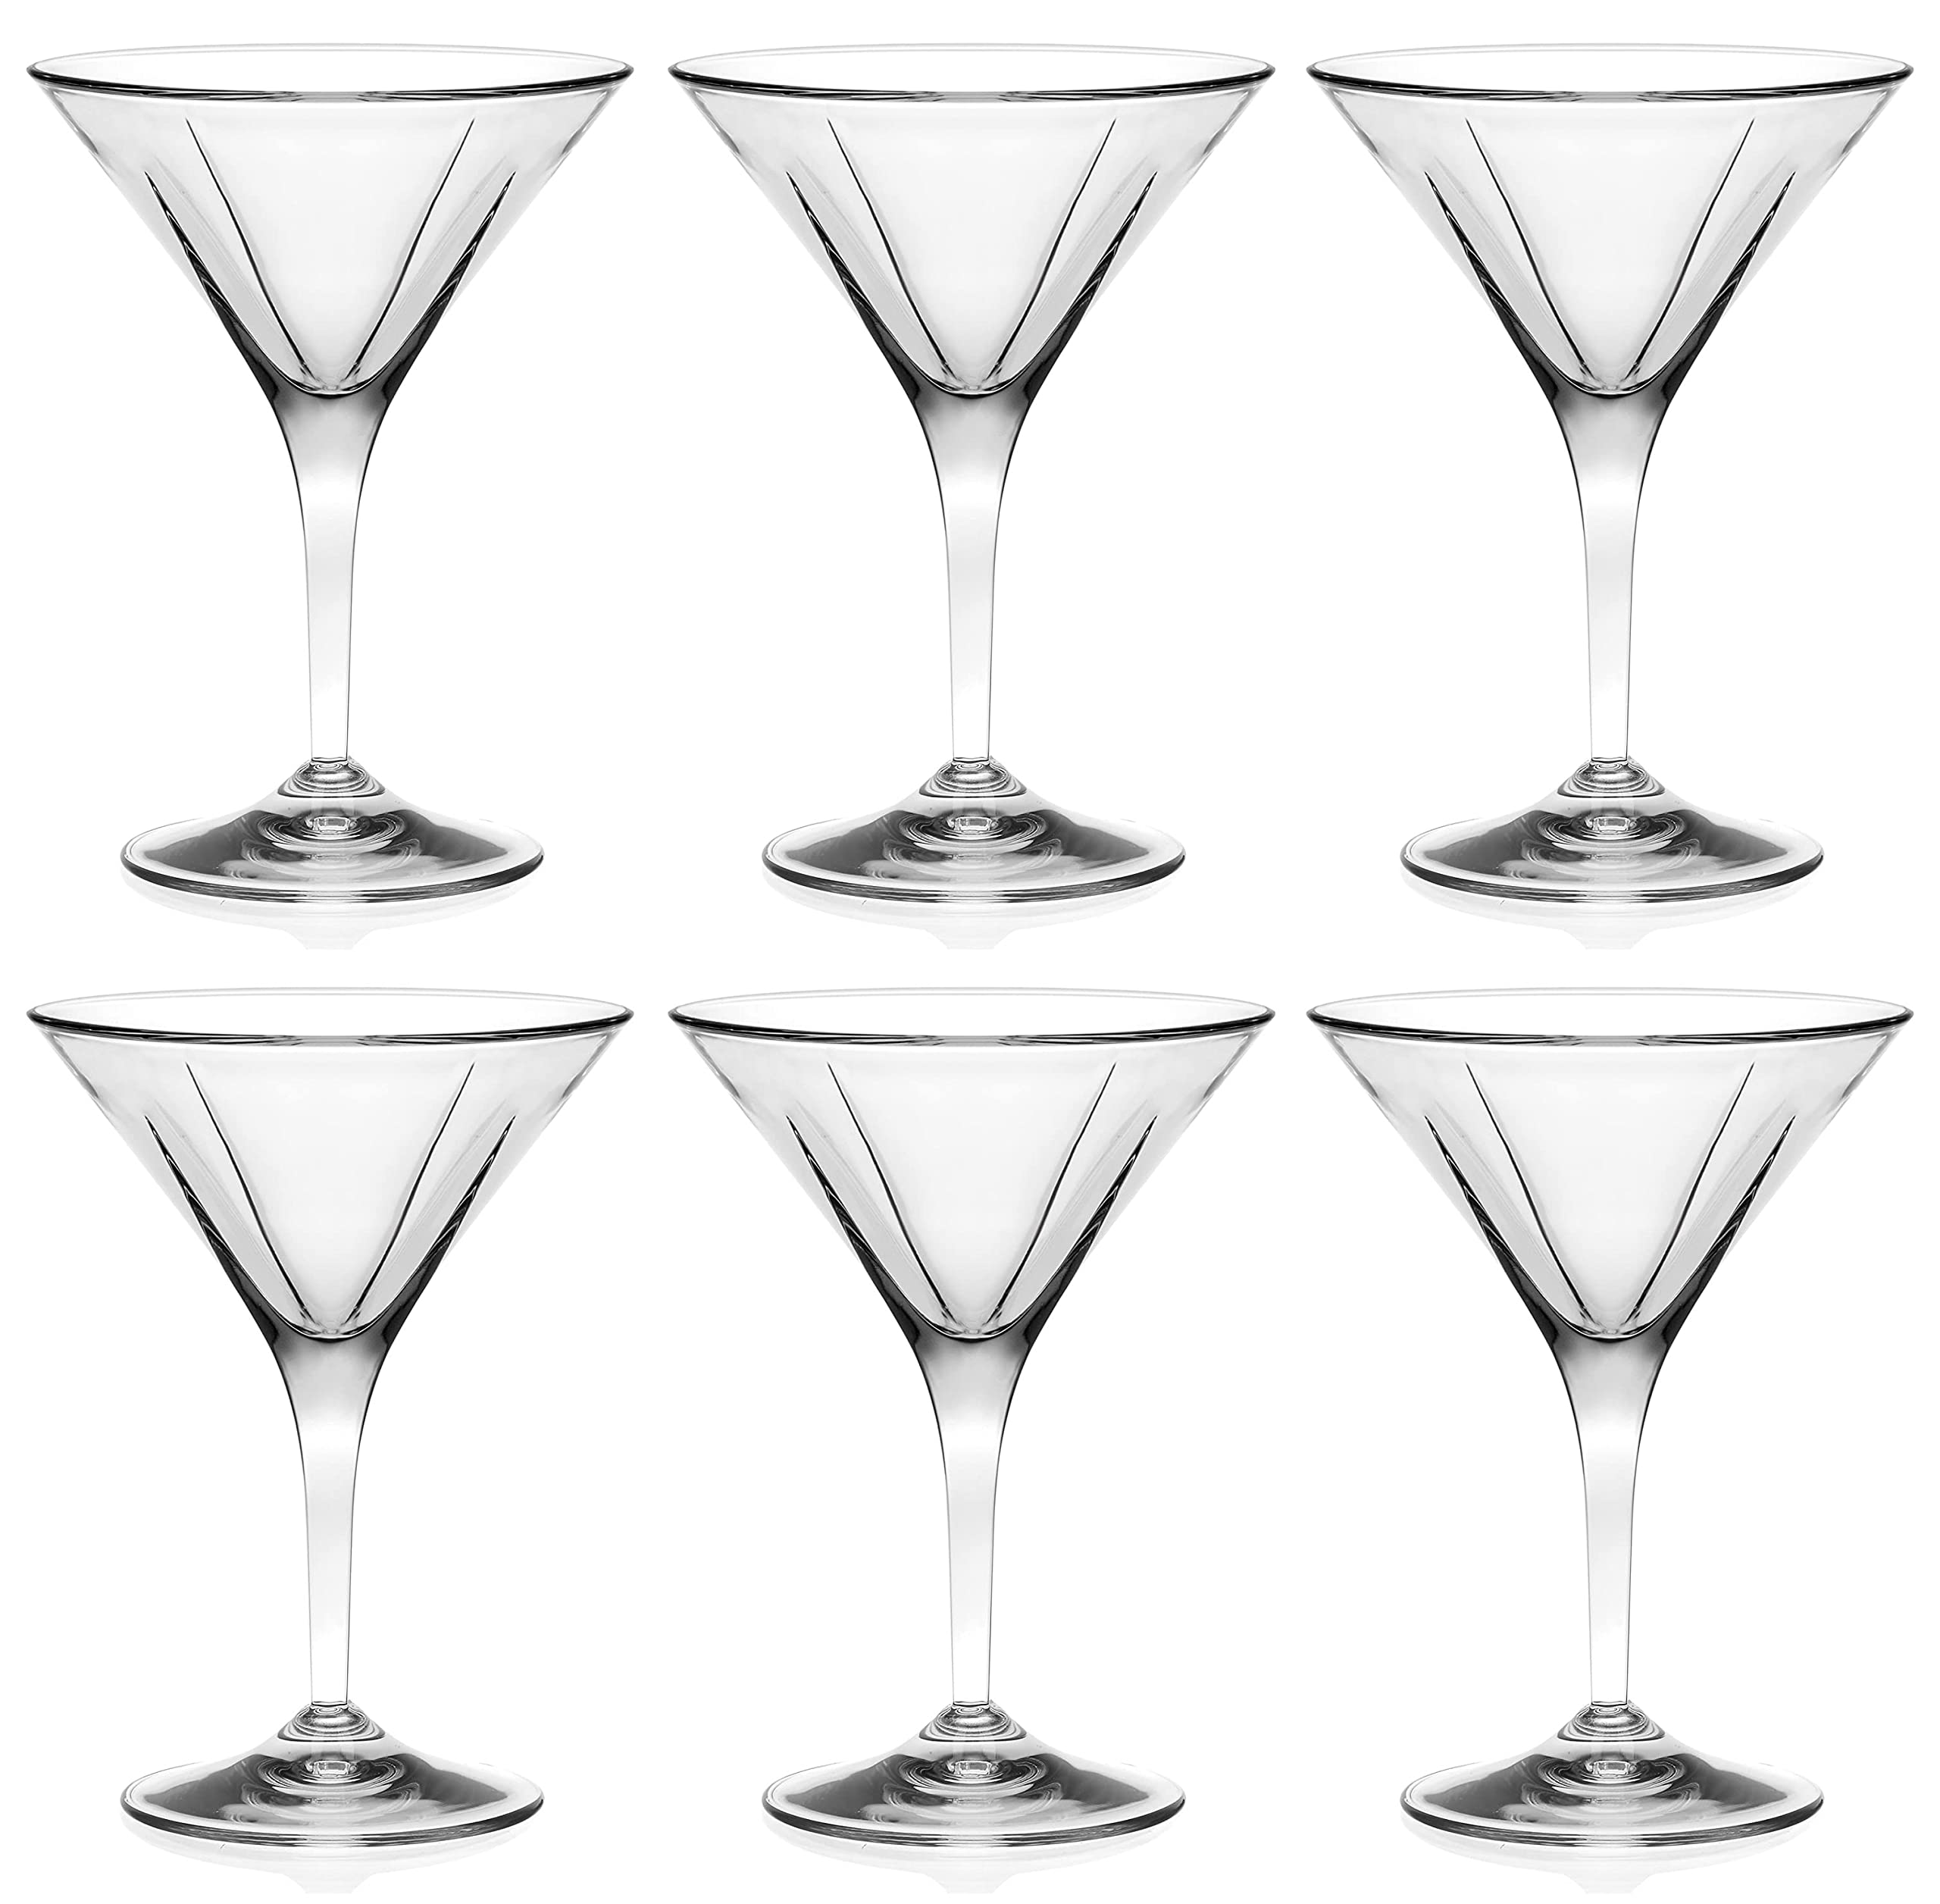 Barski Martini - Glasses - Classic Clear - Set of 6 - Stemmed Made in Europe - 5 oz.